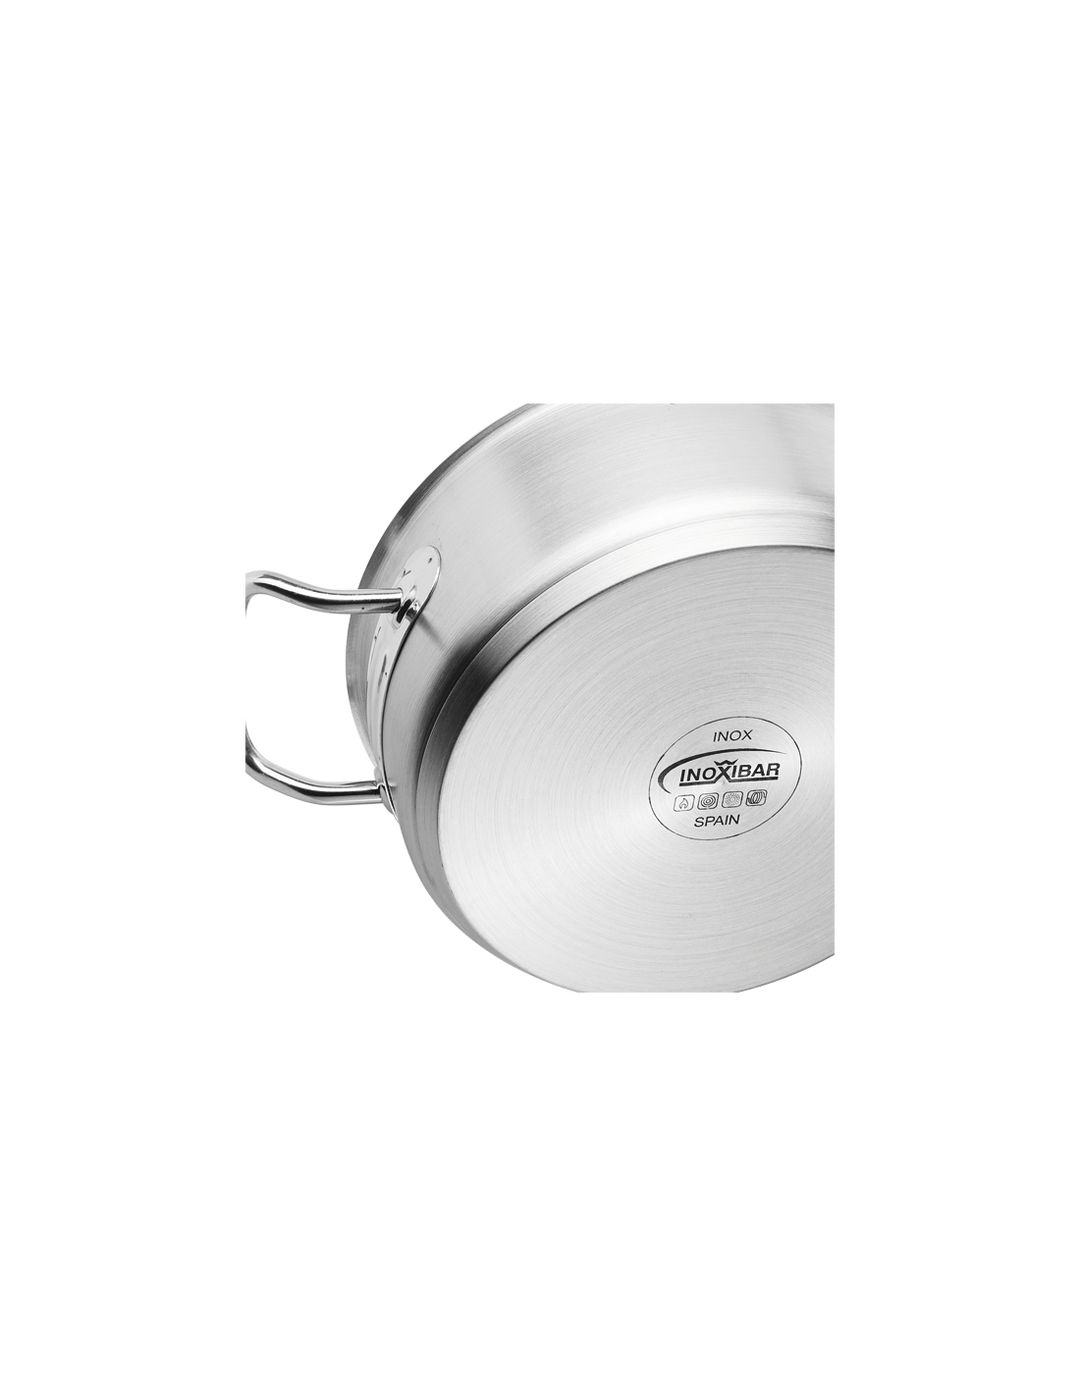 Inoxibar 65653 Braising pan, Dutch oven